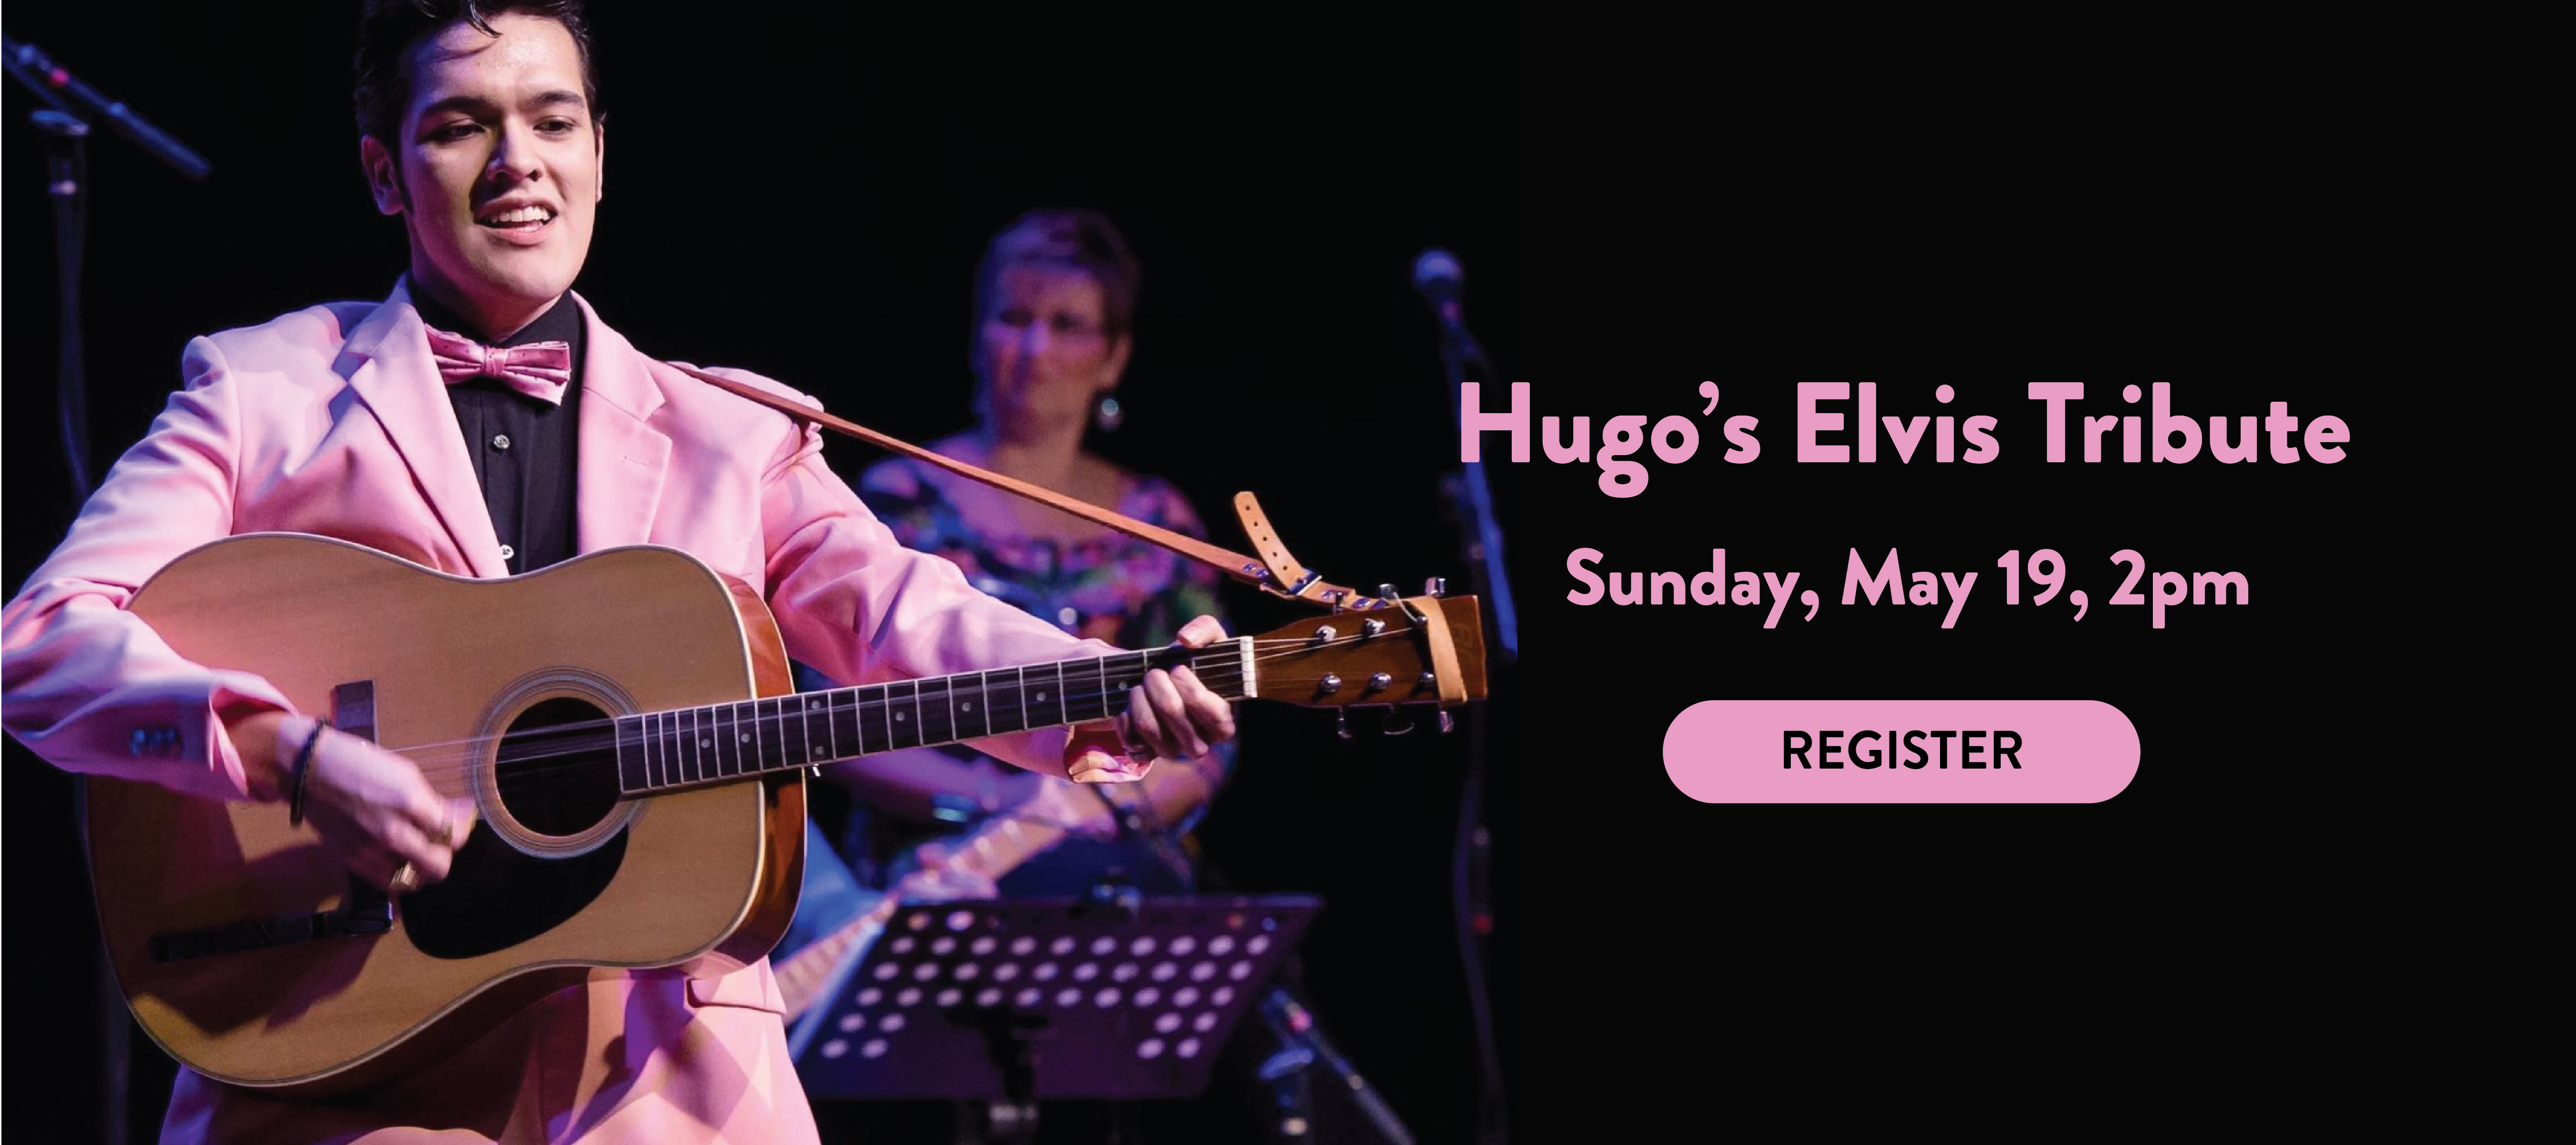 phpl, Prospect Heights Public Library, Hugo's Elvis Tribute, 70s Las Vegas, Vintage, Impersonator, tribute artist, live performance, live music, Adult